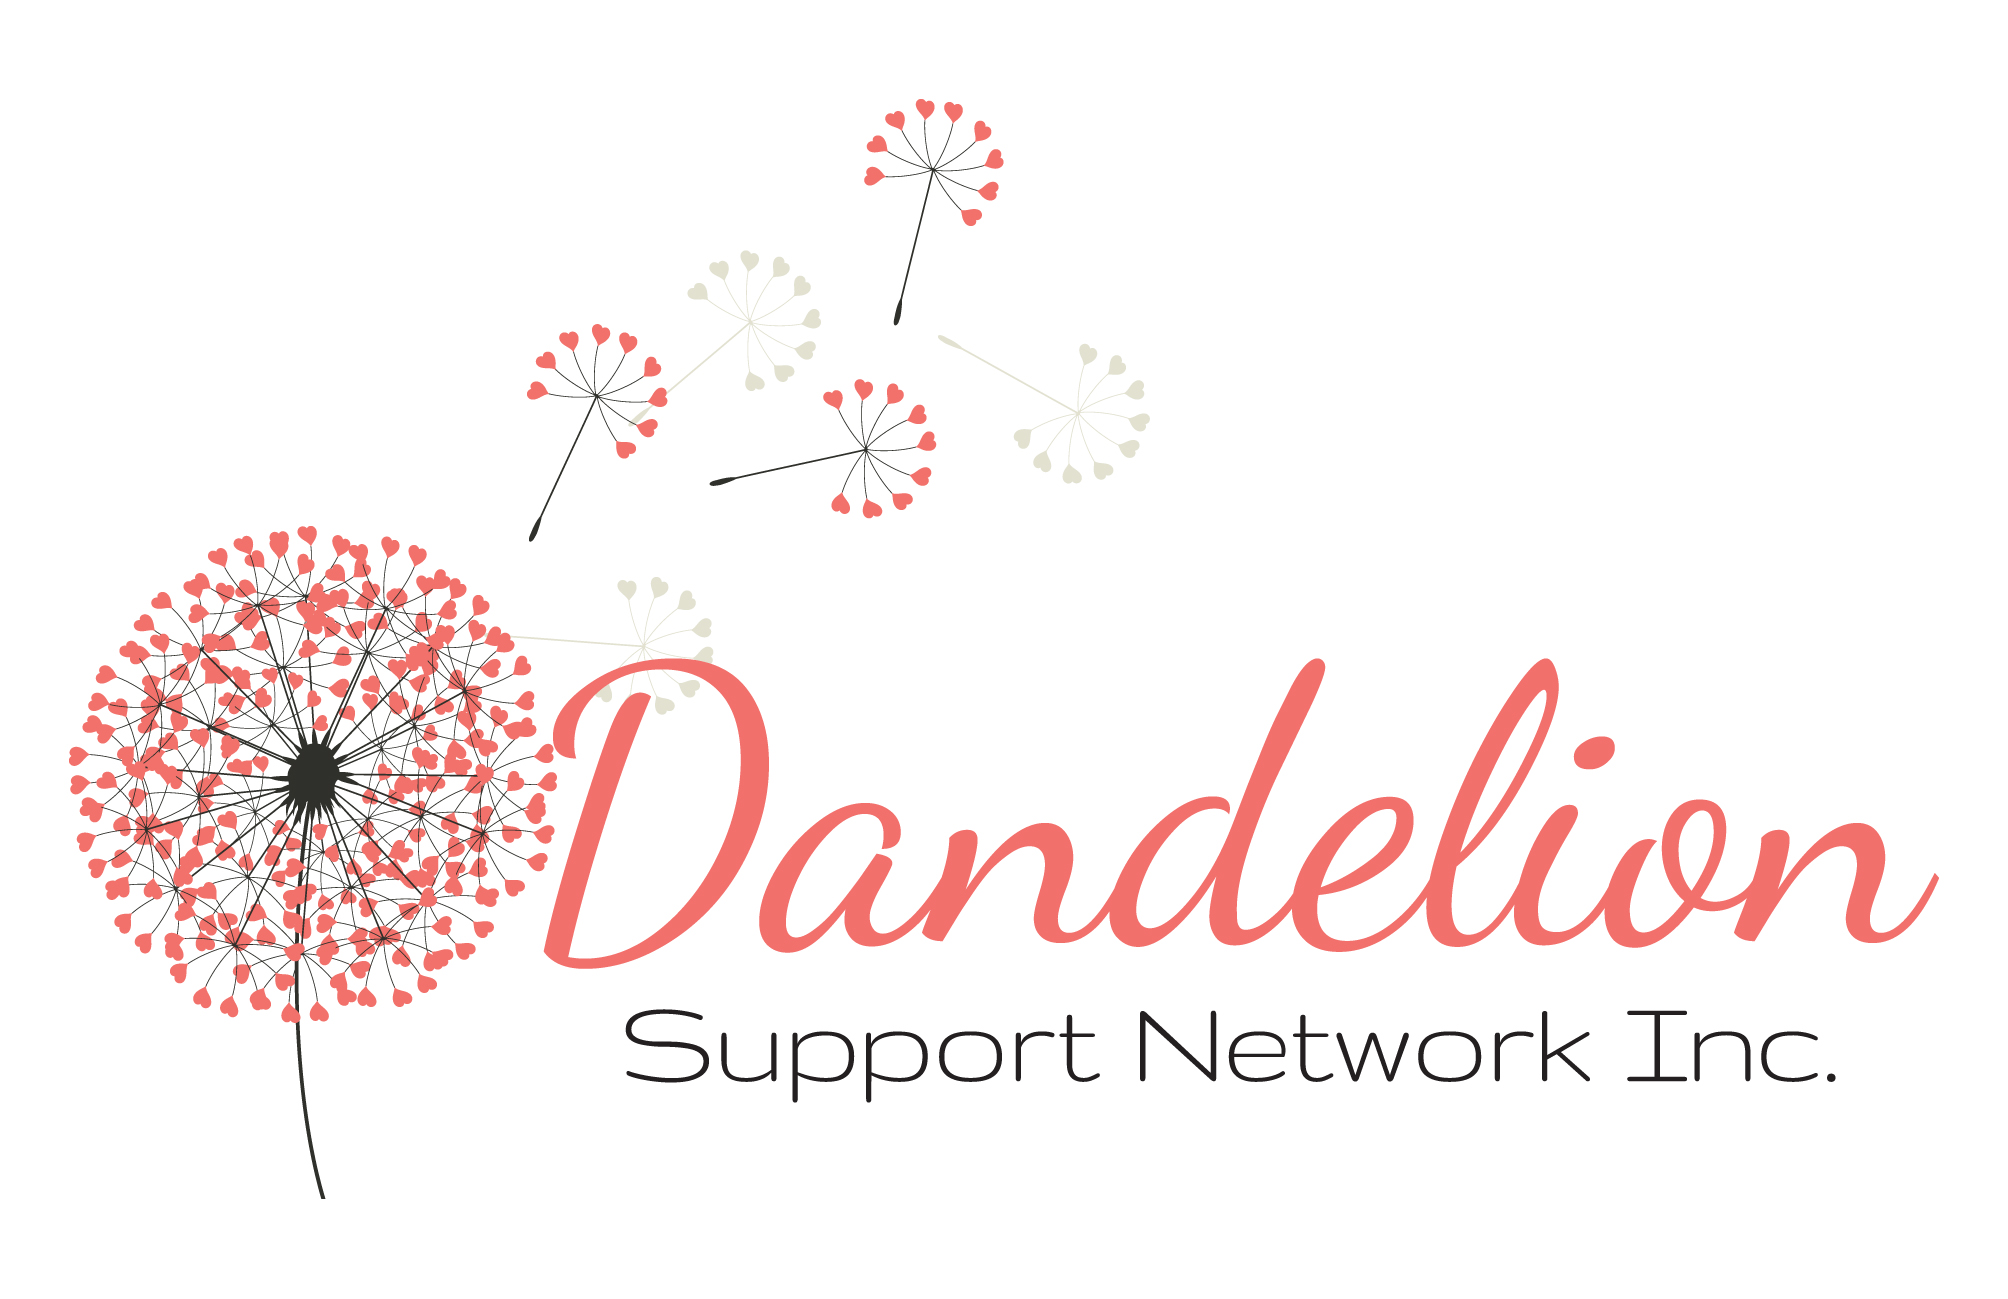 Dandelion Support Network Inc logo